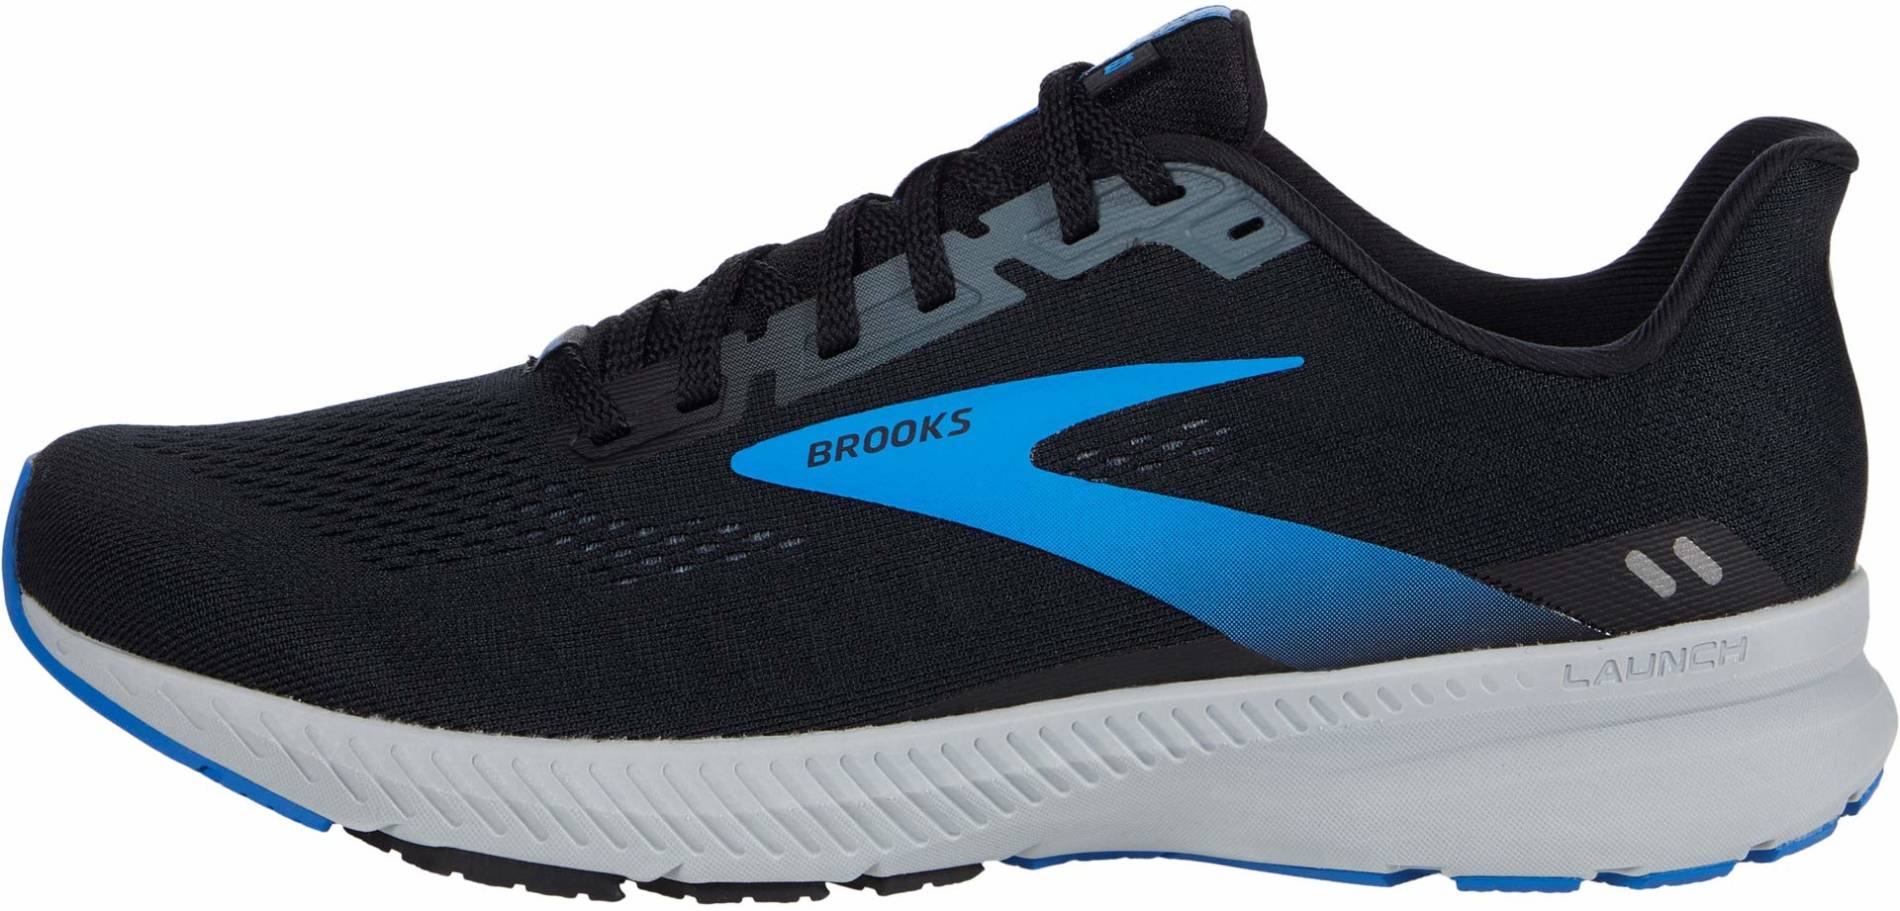 lightest brooks running shoes